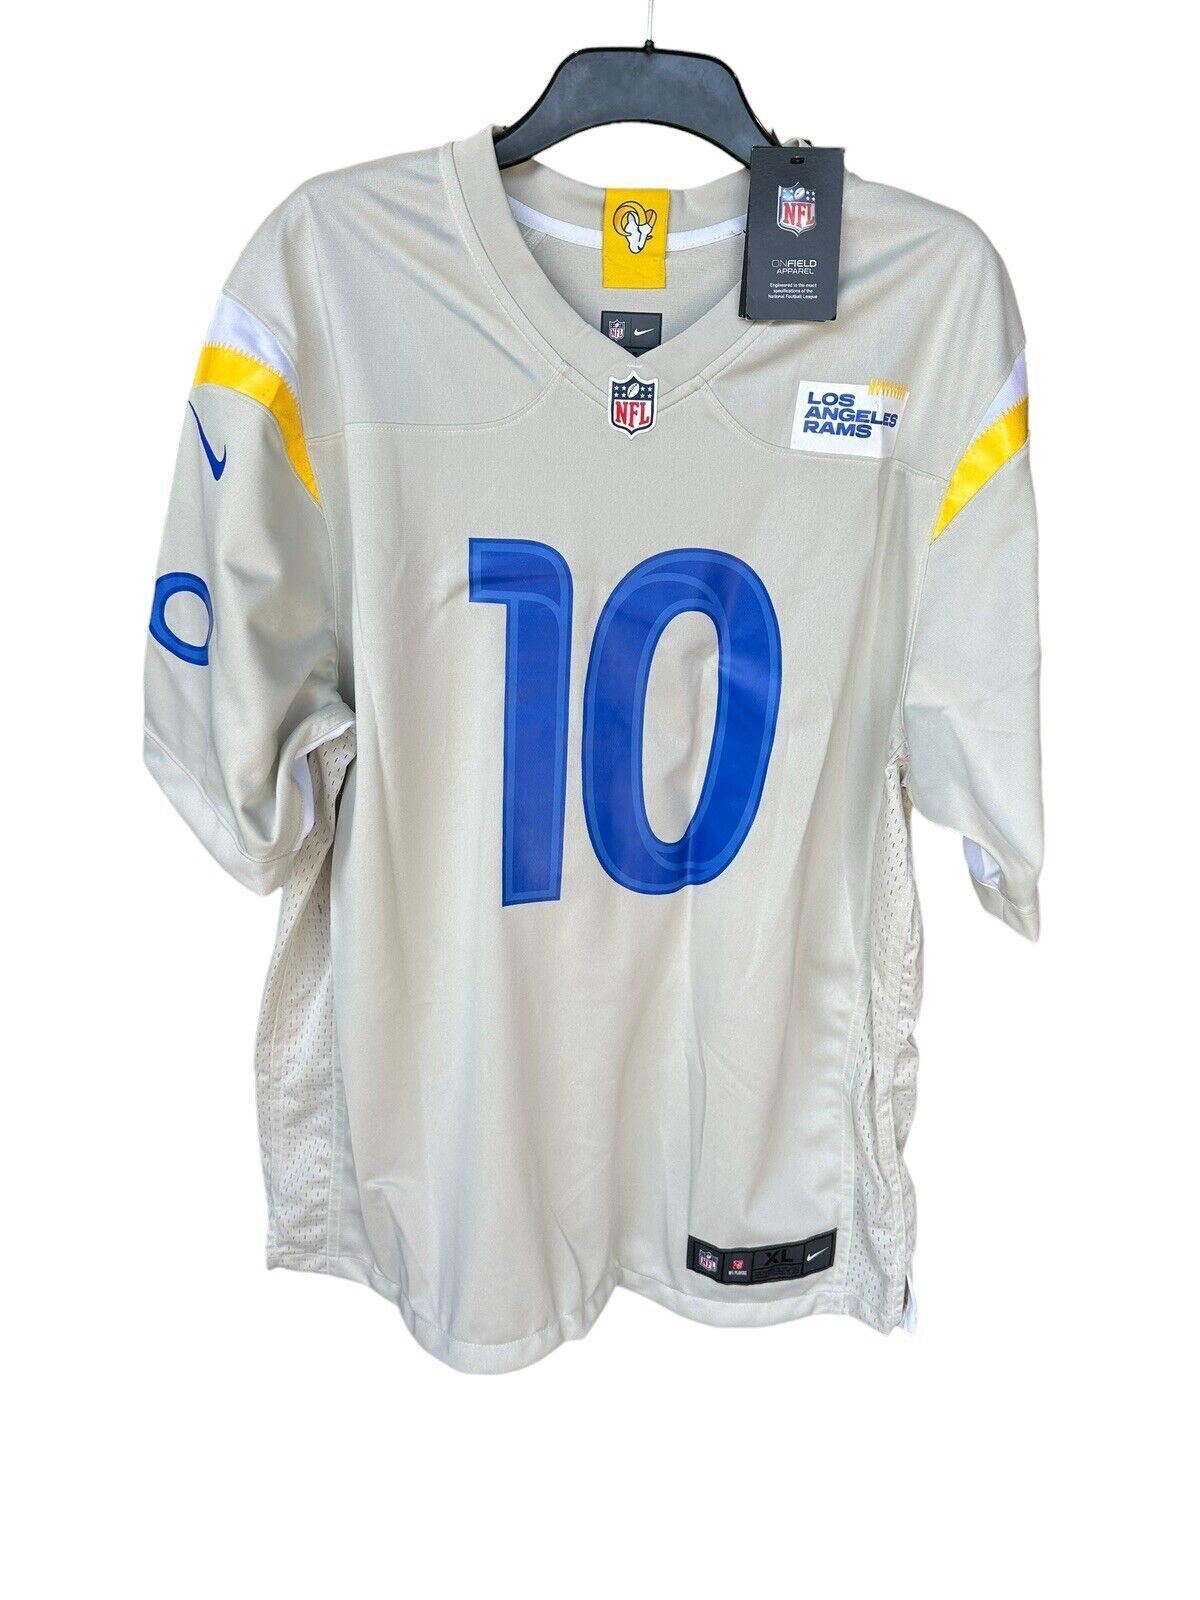 Nike NFL Los Angeles Rams Jersey KUUP 10 Mens XL